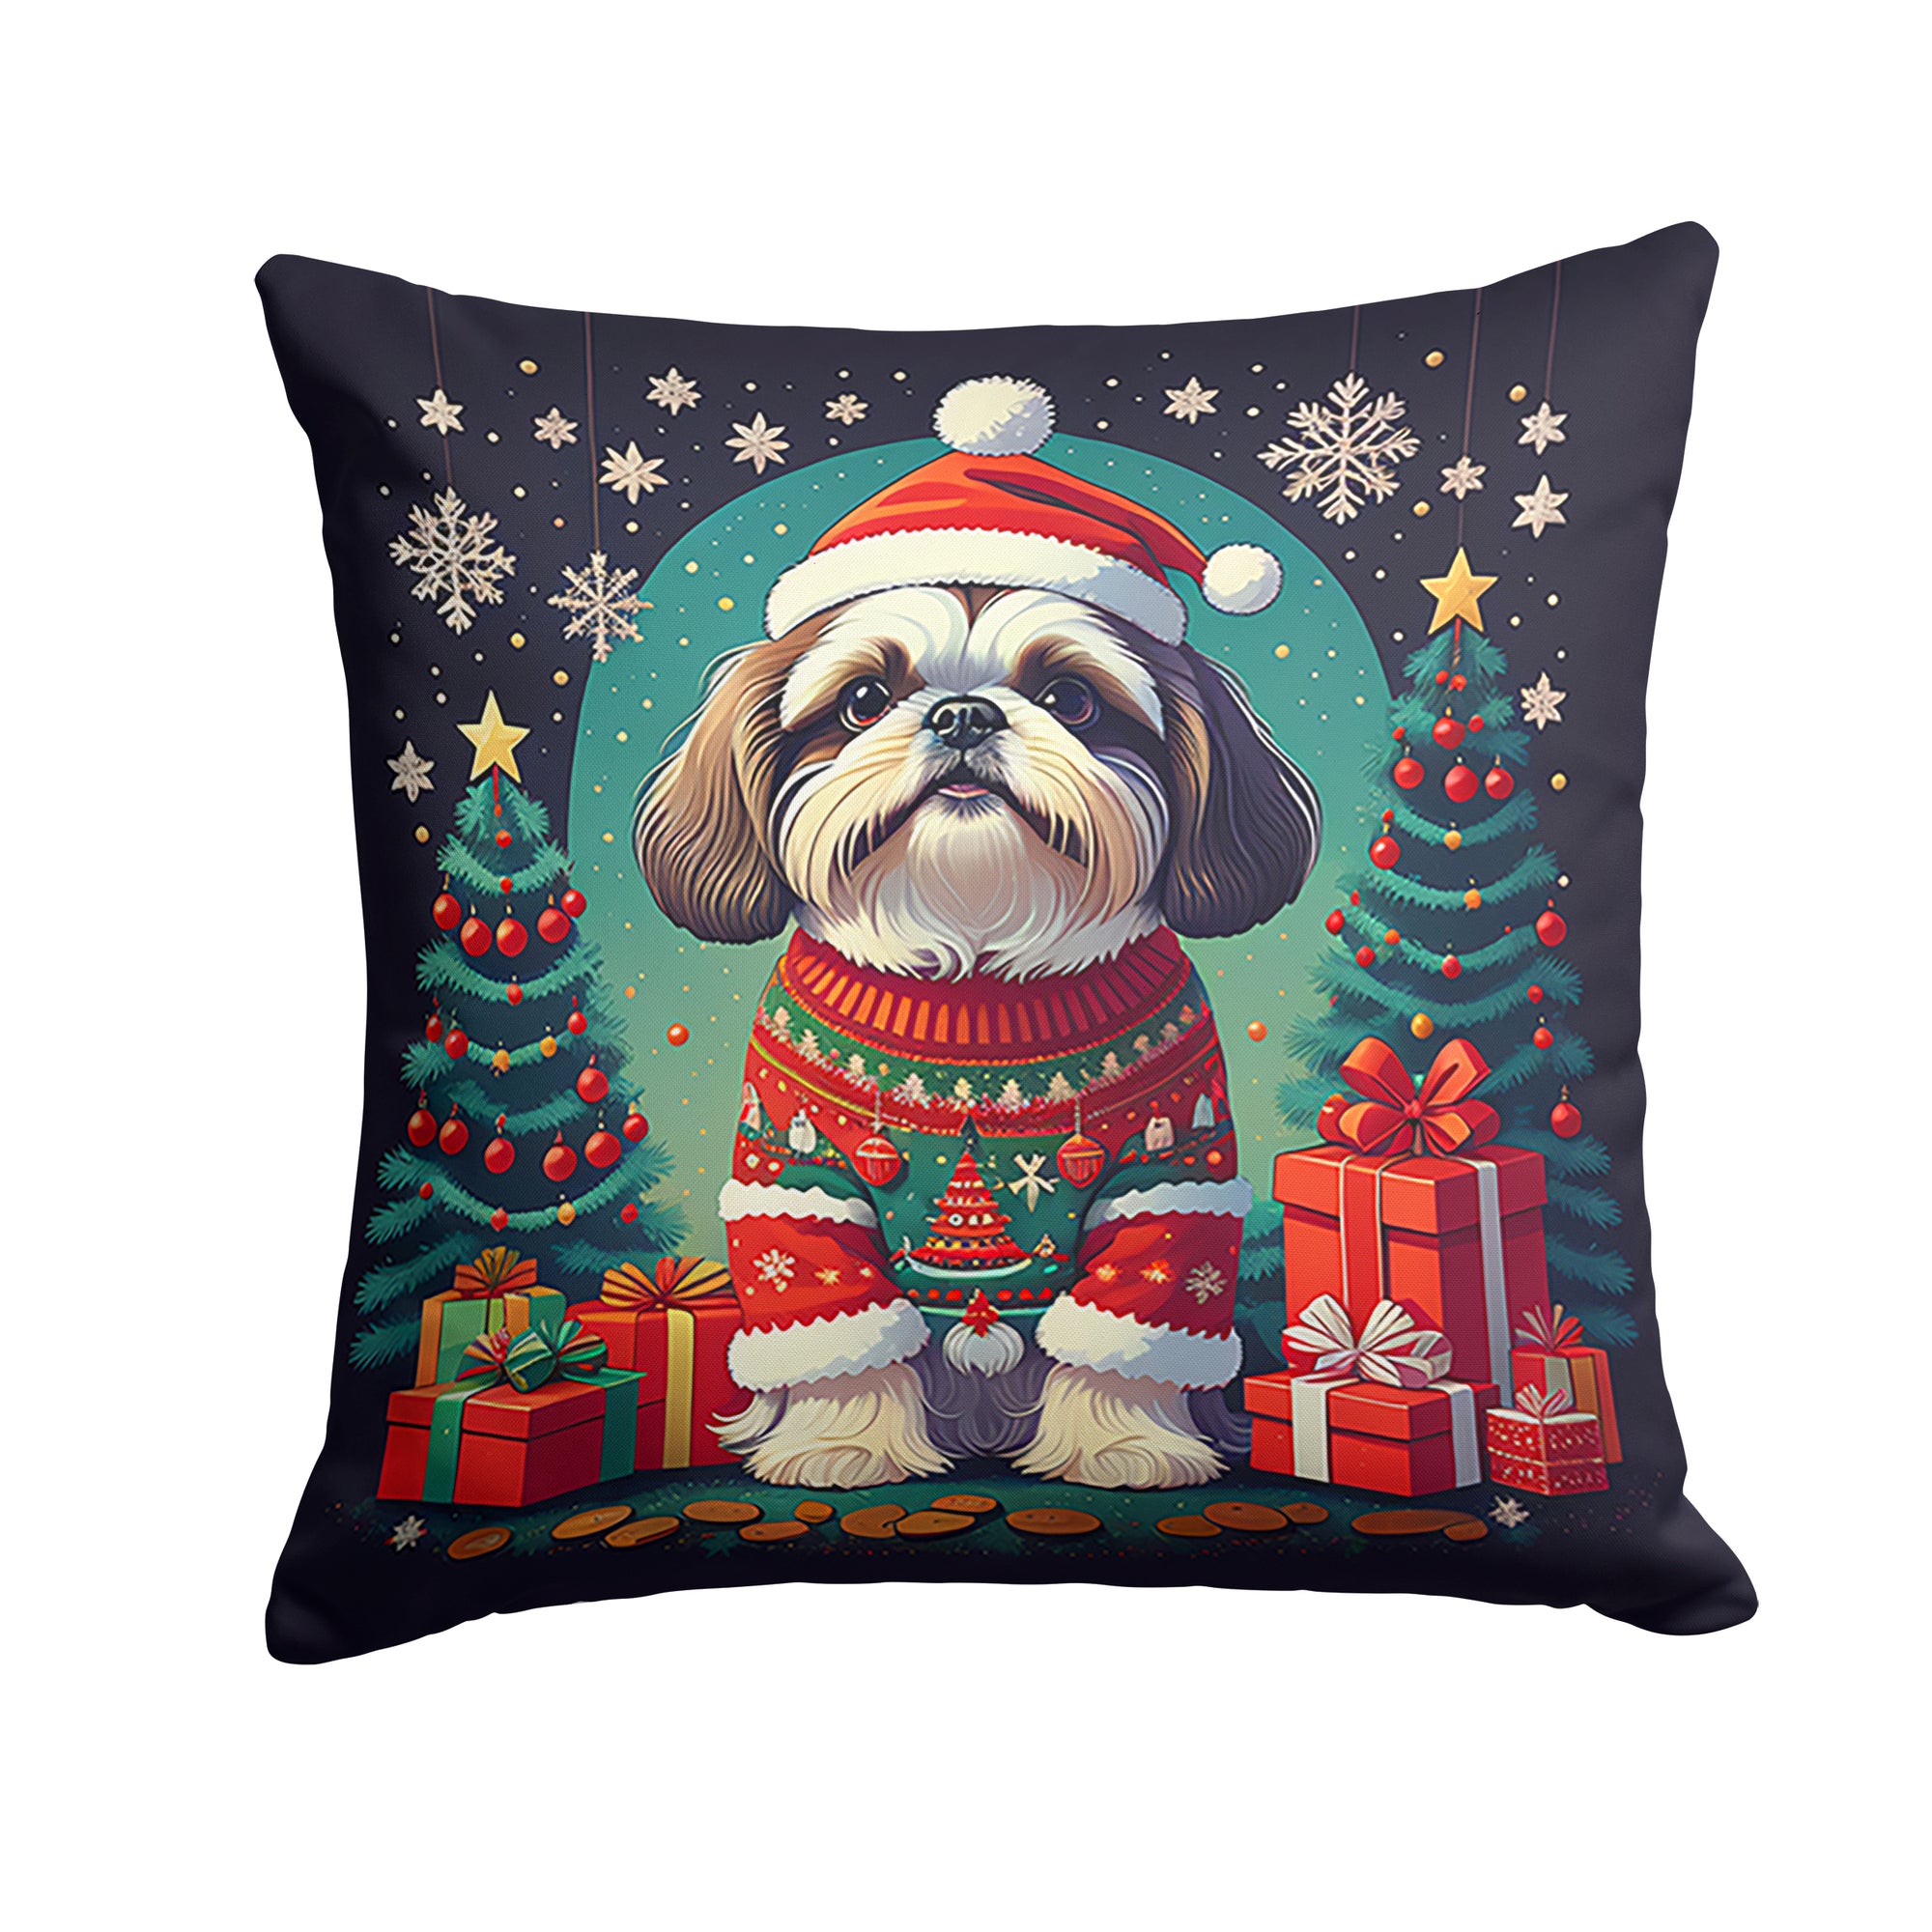 Buy this Shih Tzu Christmas Fabric Decorative Pillow